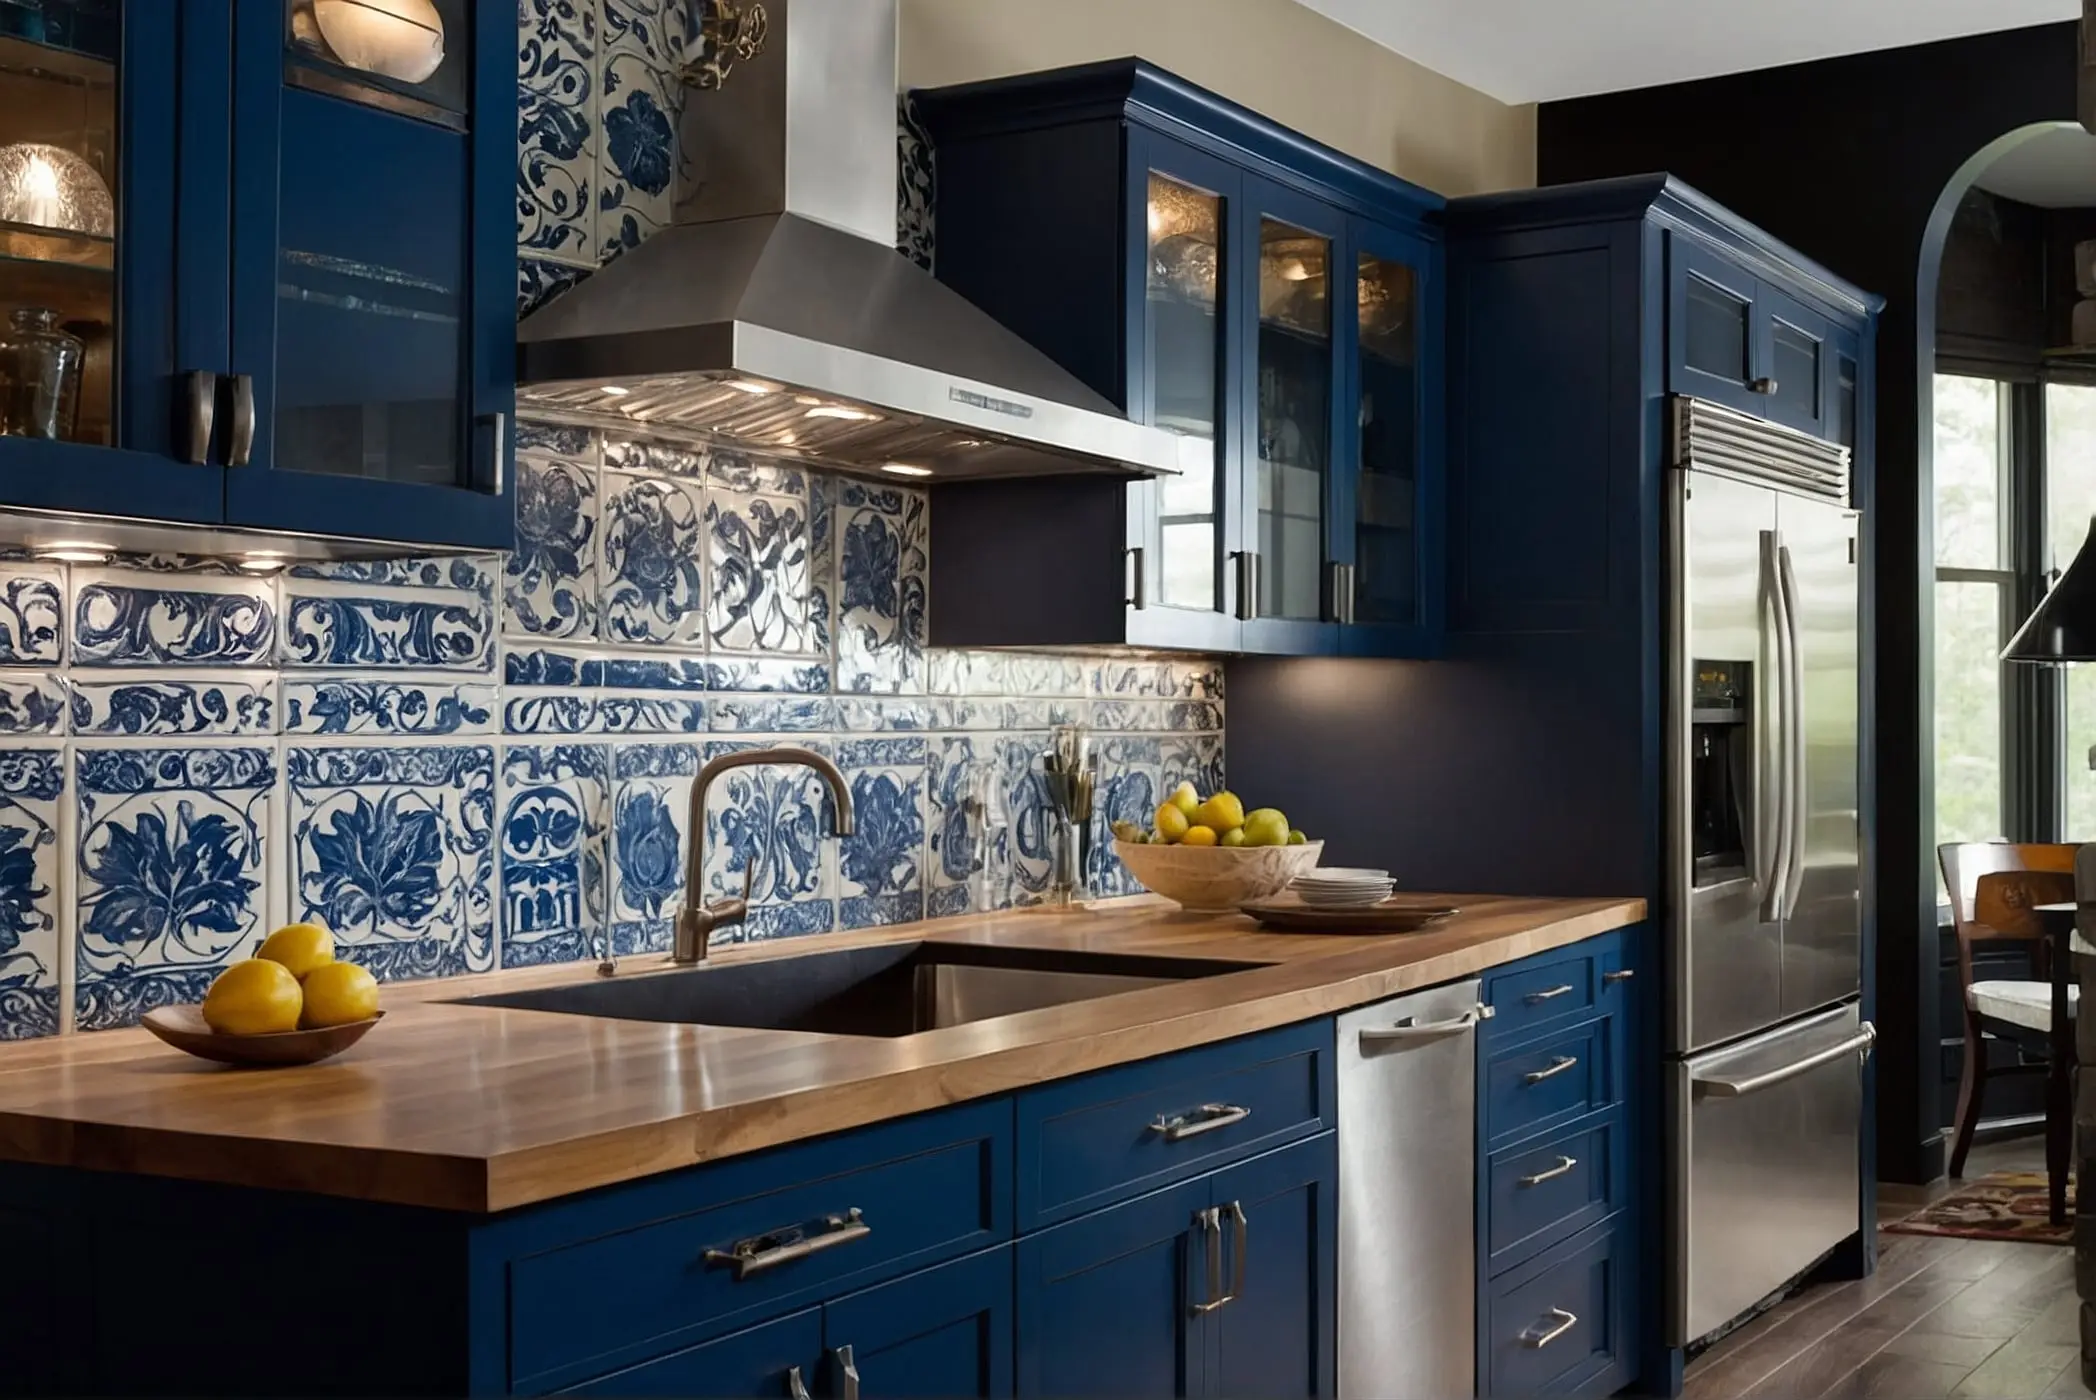 Backsplash ideas for Blue and White Kitchen Cabinets 2